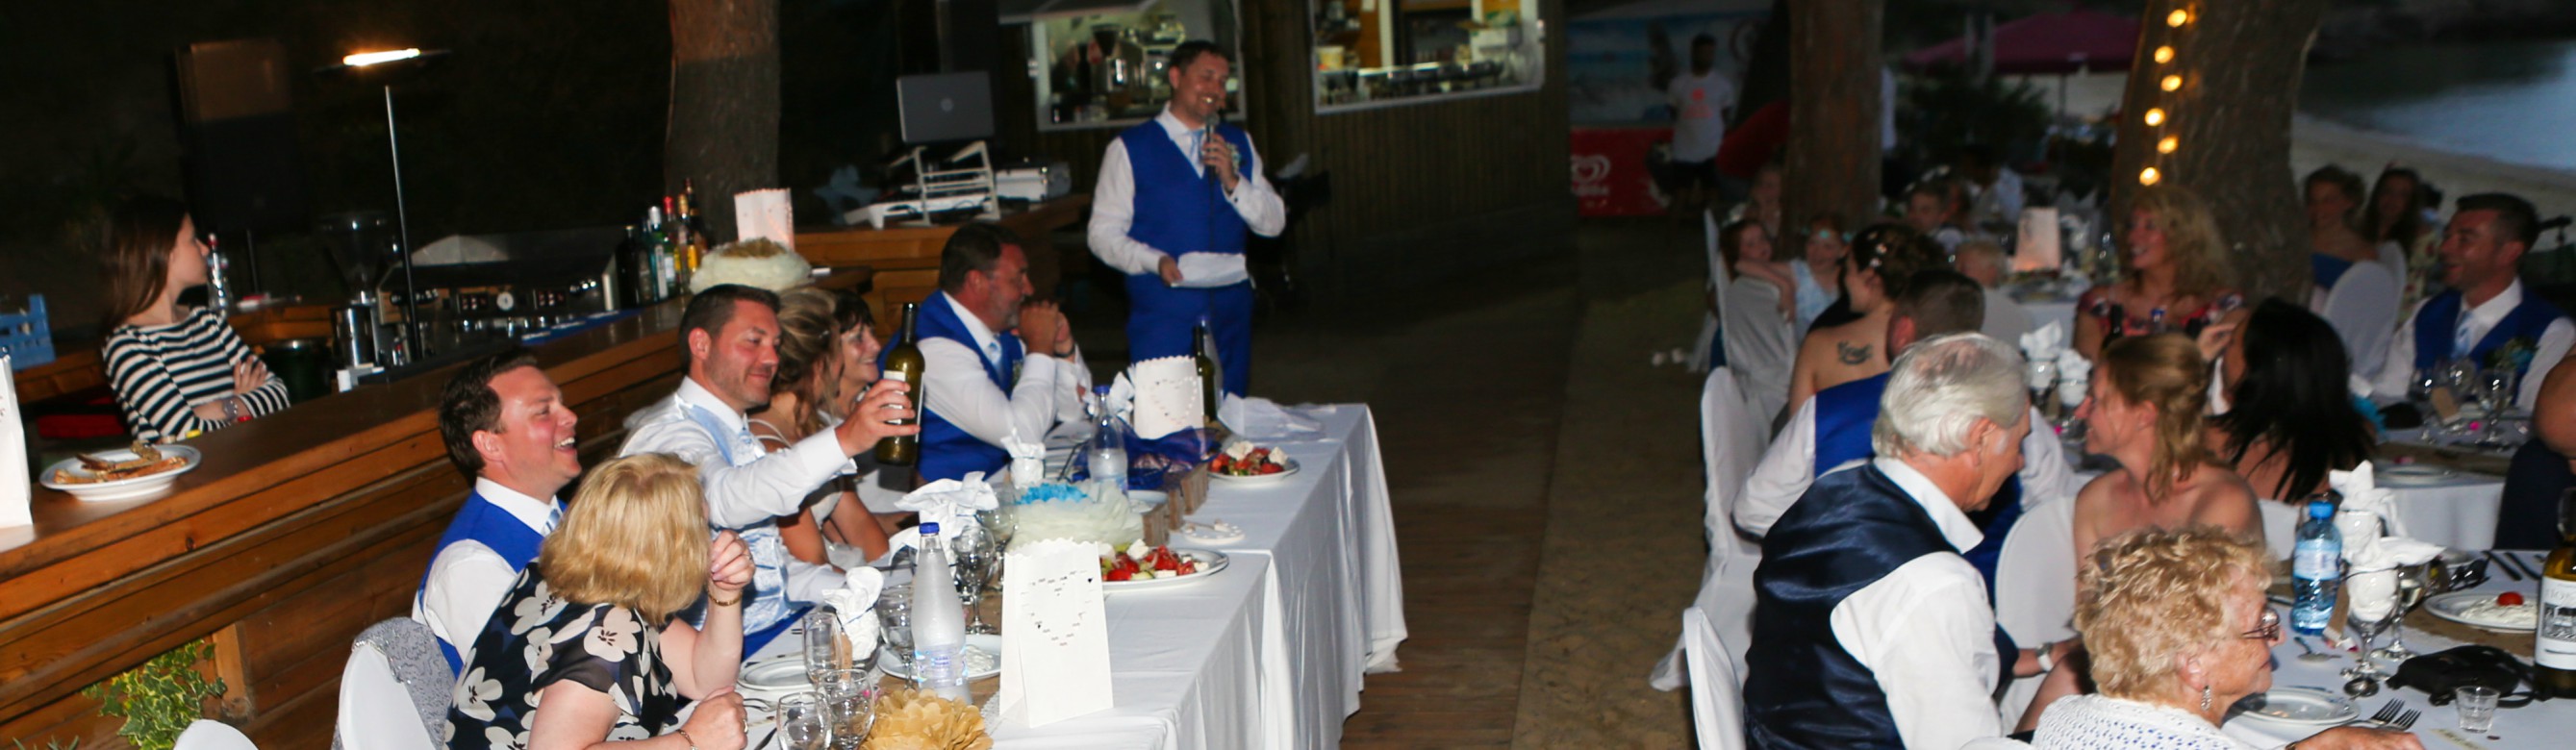 Book your wedding day in Agia Eleni Beach Bar Skiathos